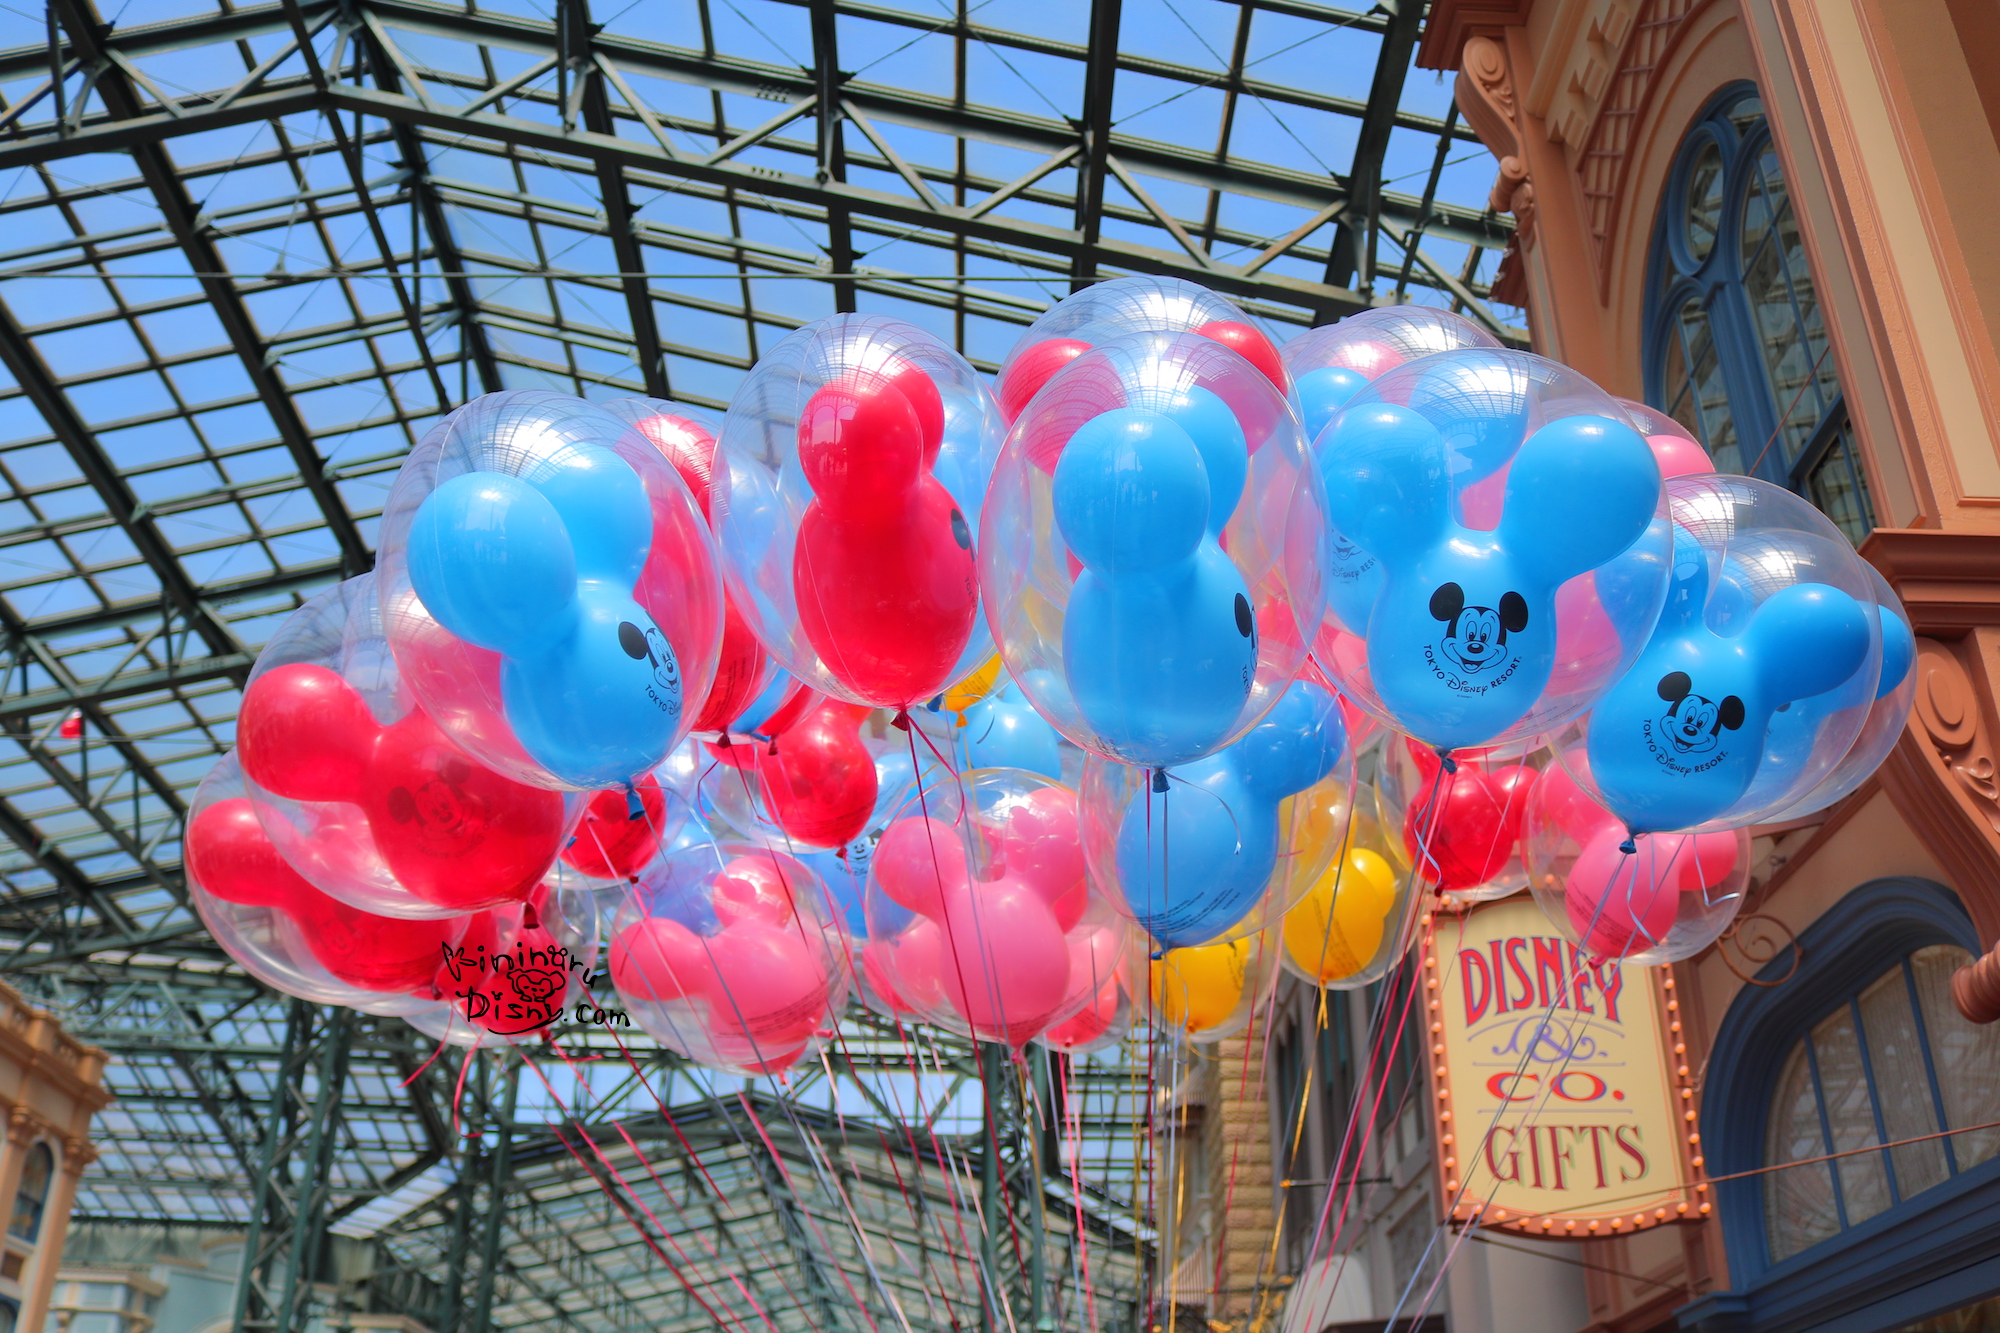 Tdr36周年 大注目のカラフルな風船 東京ディズニーランド ミッキーバルーン 気になるディズニーブログ